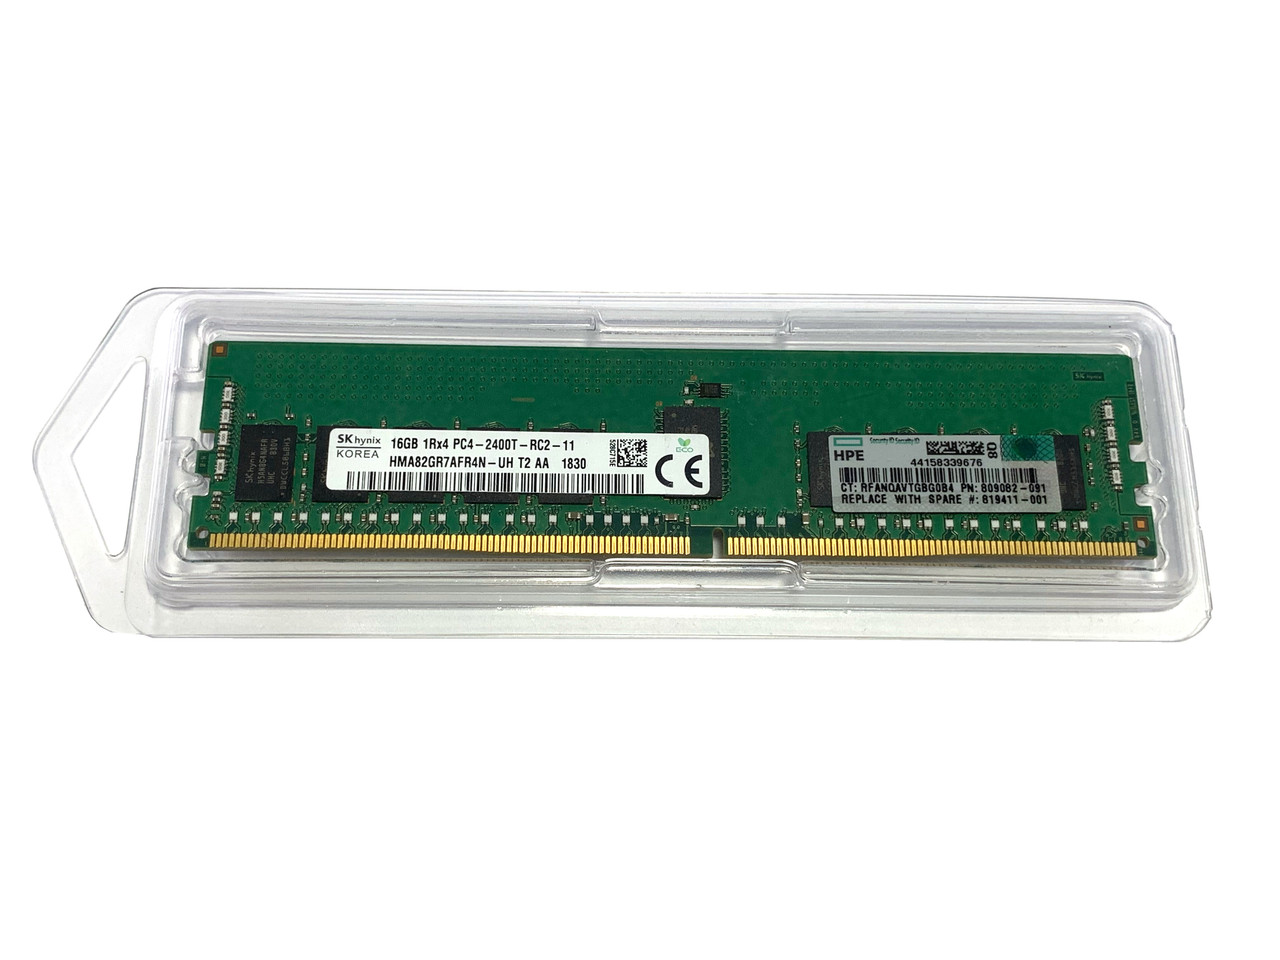 HP 805349-B21 - HP 16GB (1x16GB) Single Rank DDR4-2400 Memory Kit by HP